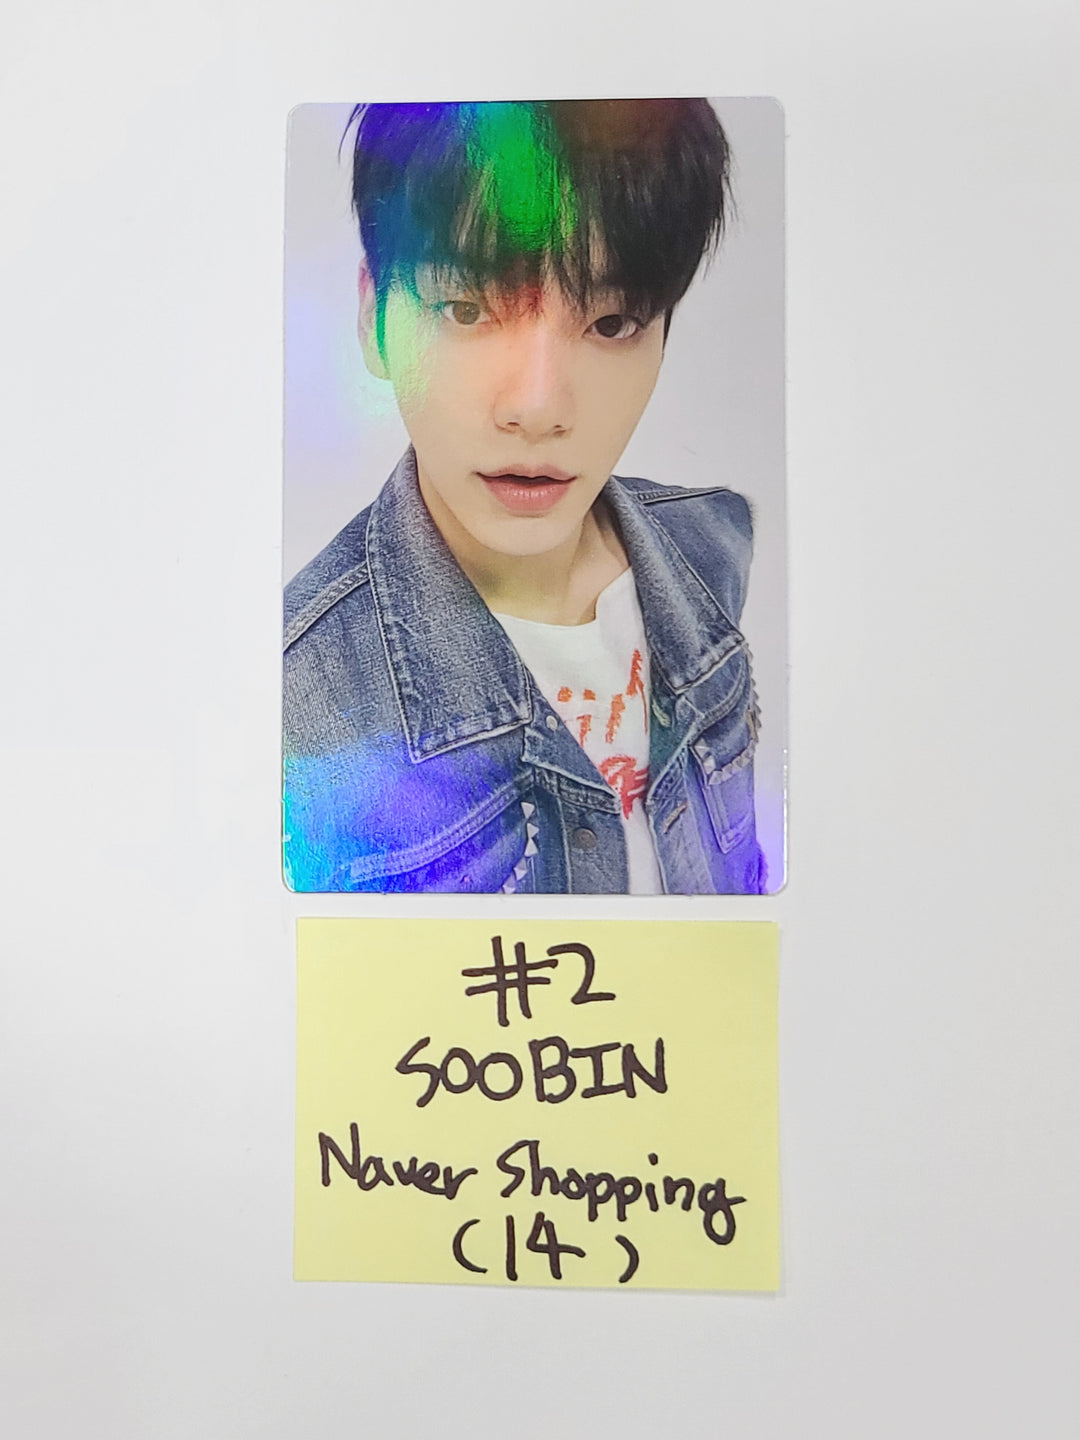 TXT "Minisode 2: Thursday's Child" - Naver Shopping Live Pre-Order Benefit Hologram Photocard